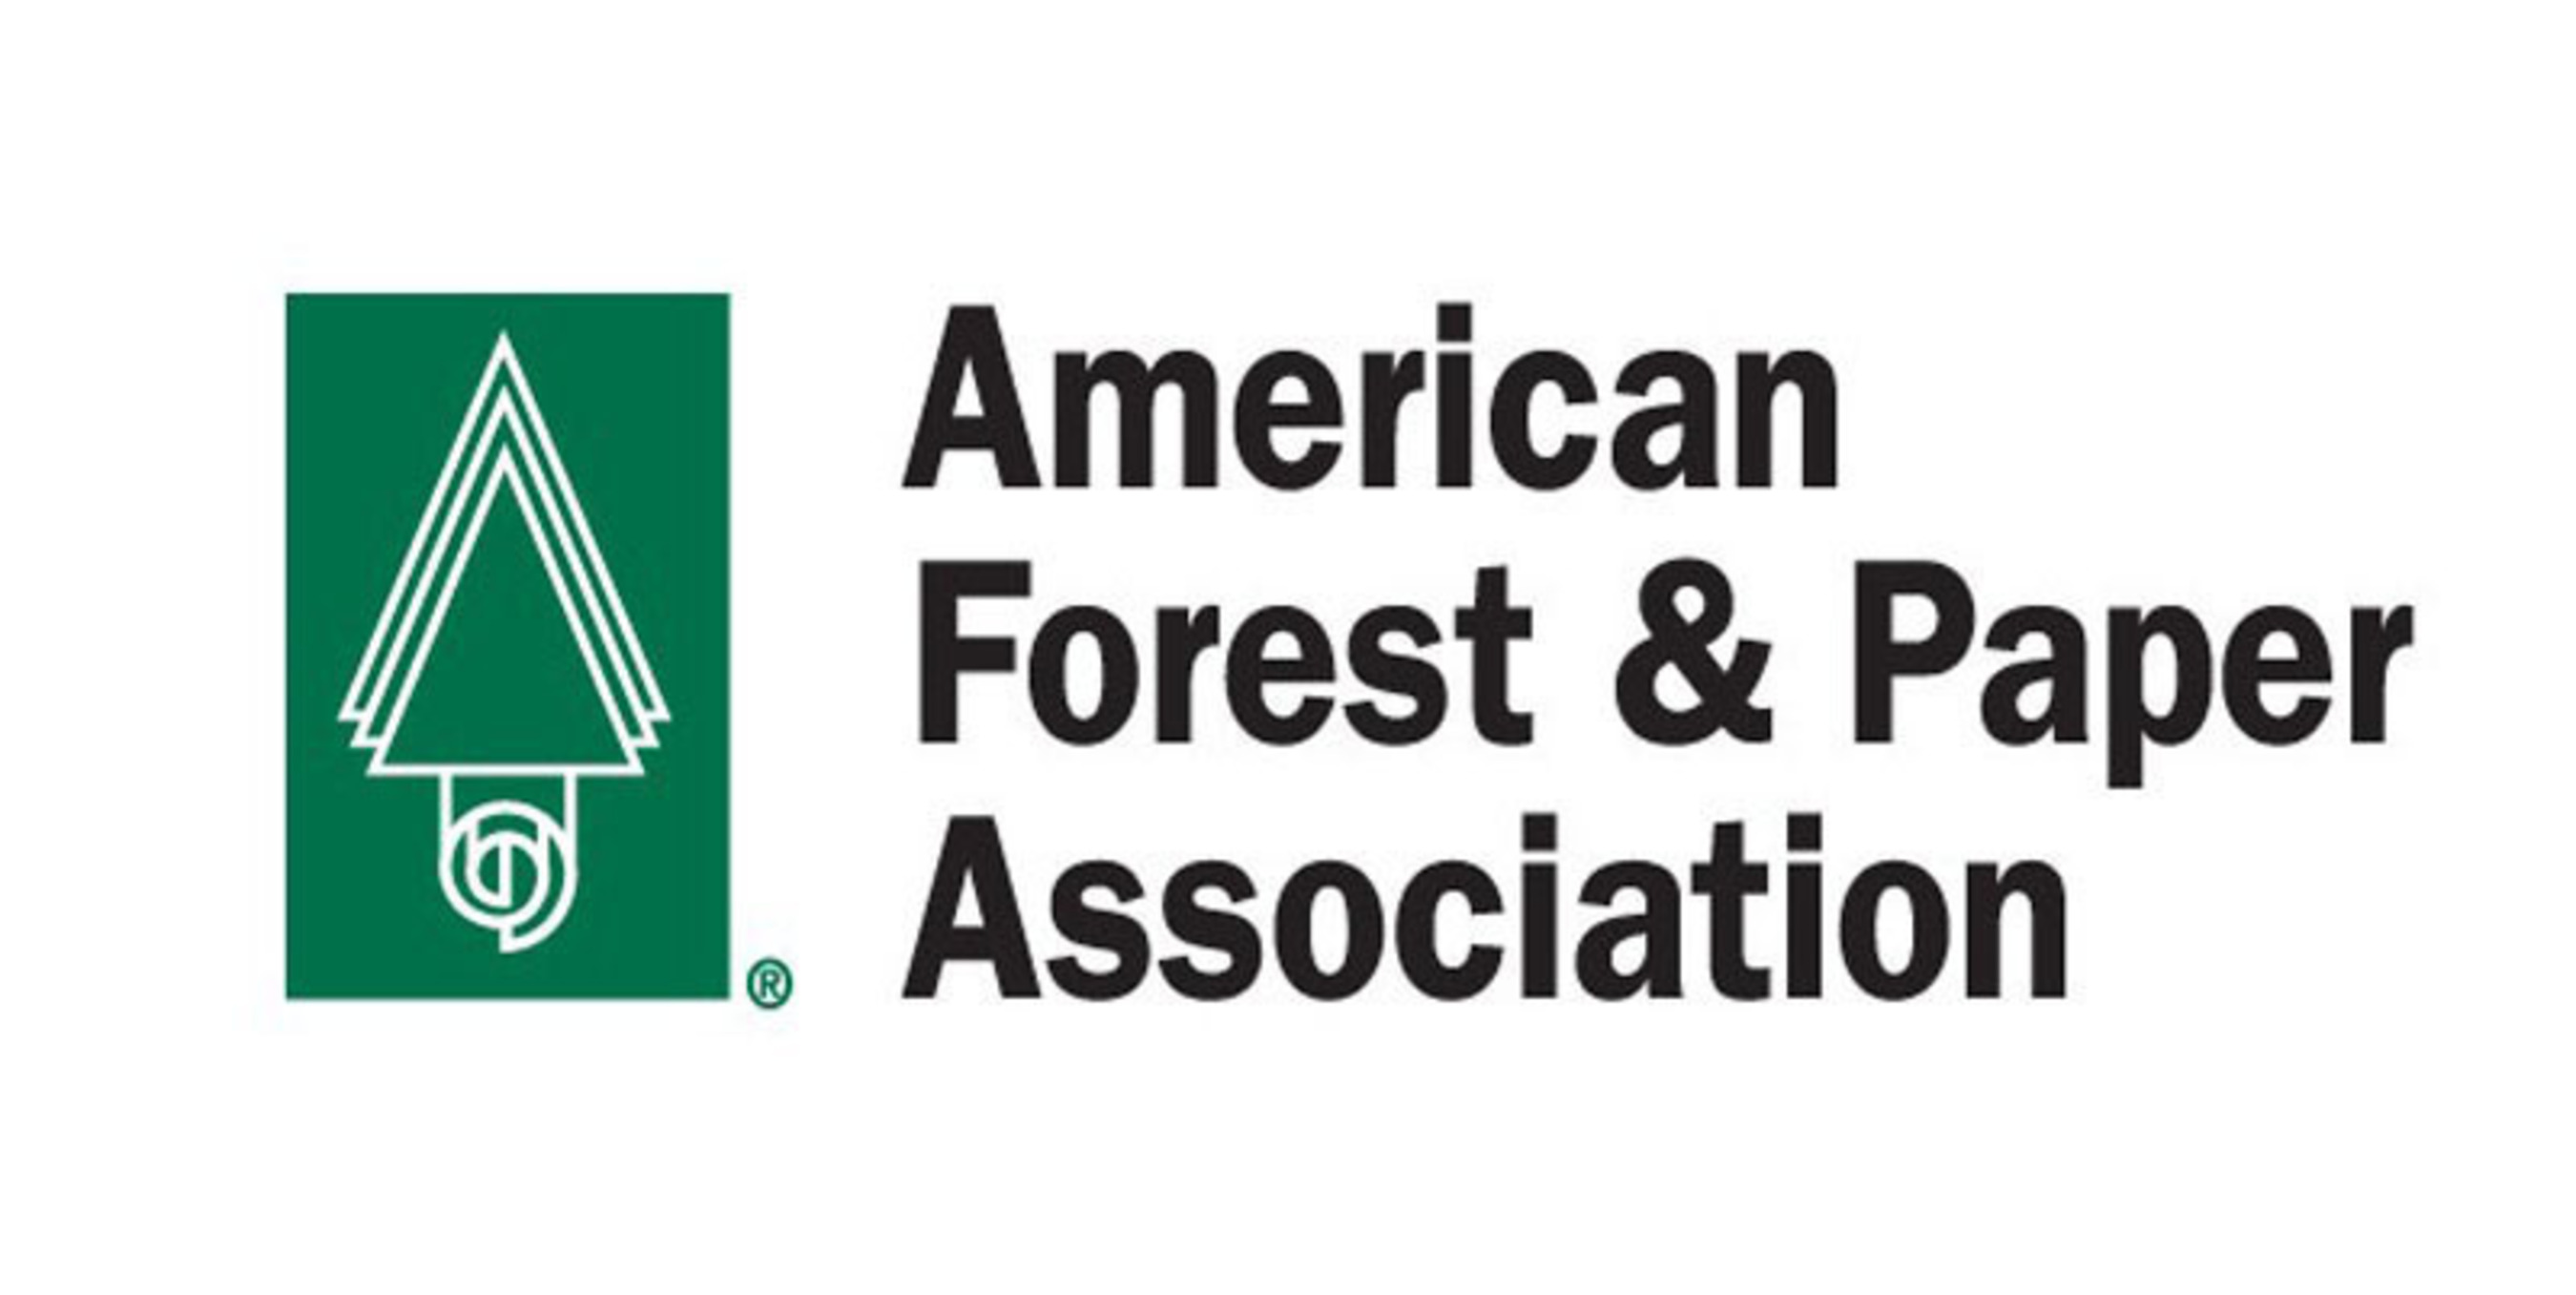 American Forest & Paper Association Logo. (PRNewsFoto/American Forest & Paper Association)